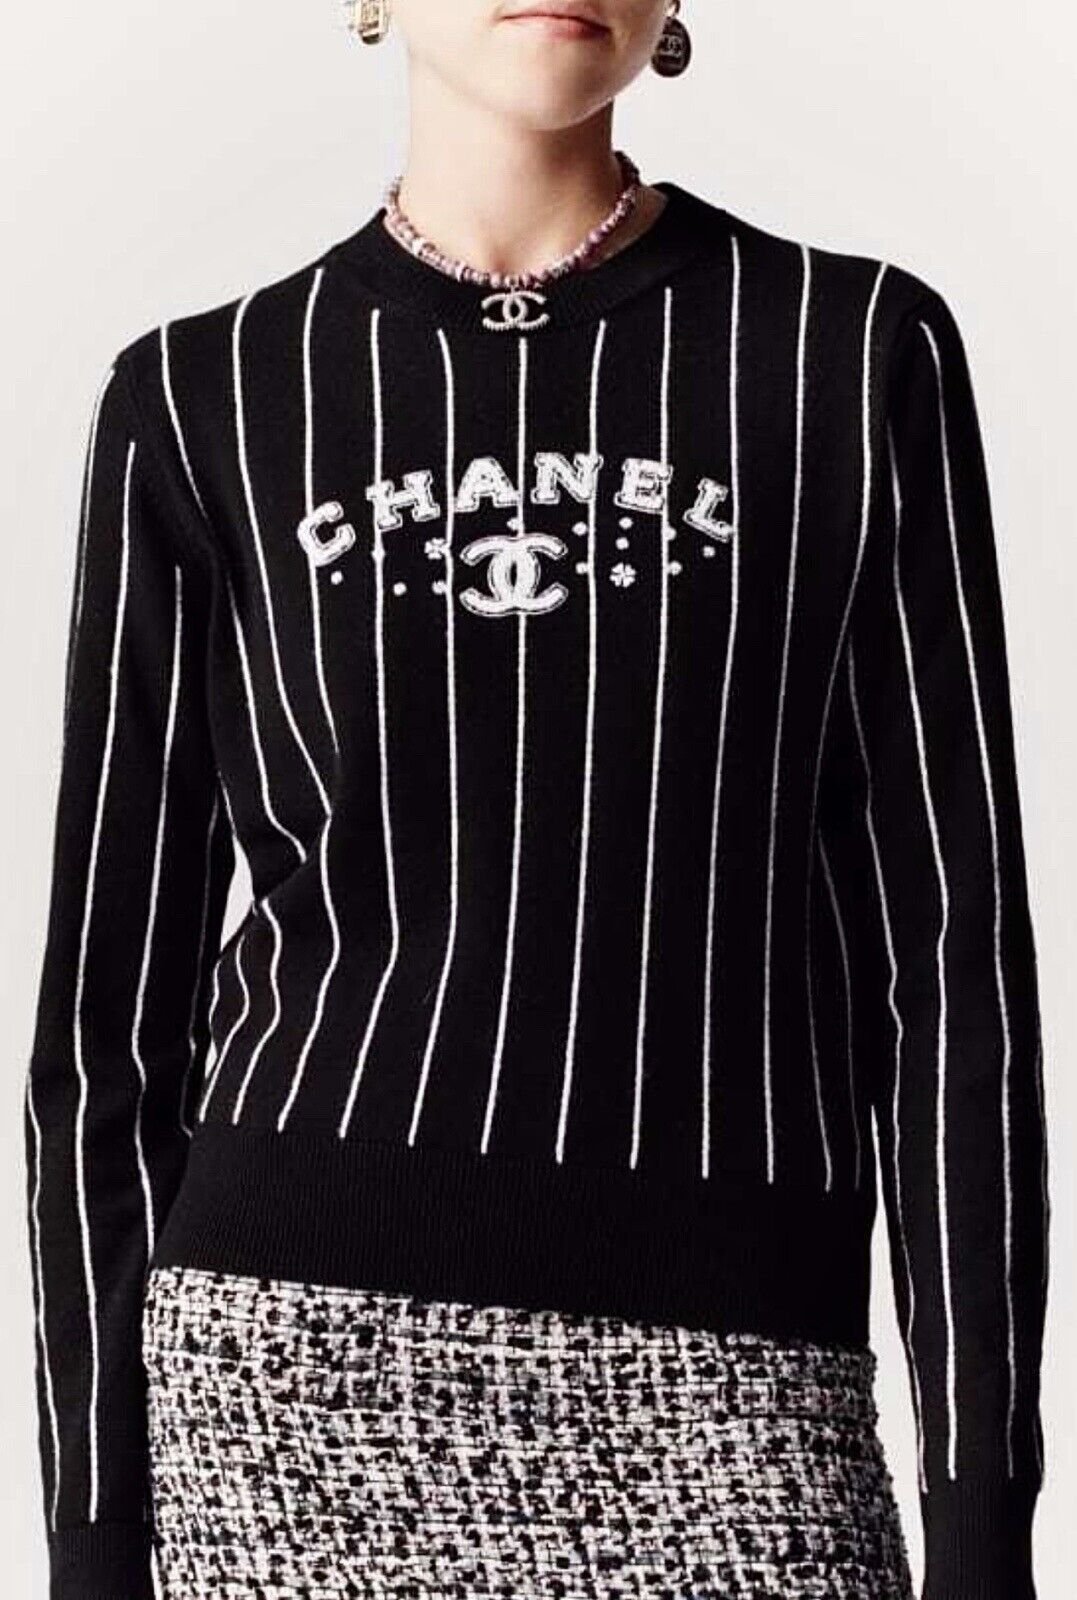 Chanel Striped Cashmere Sweater.jpg